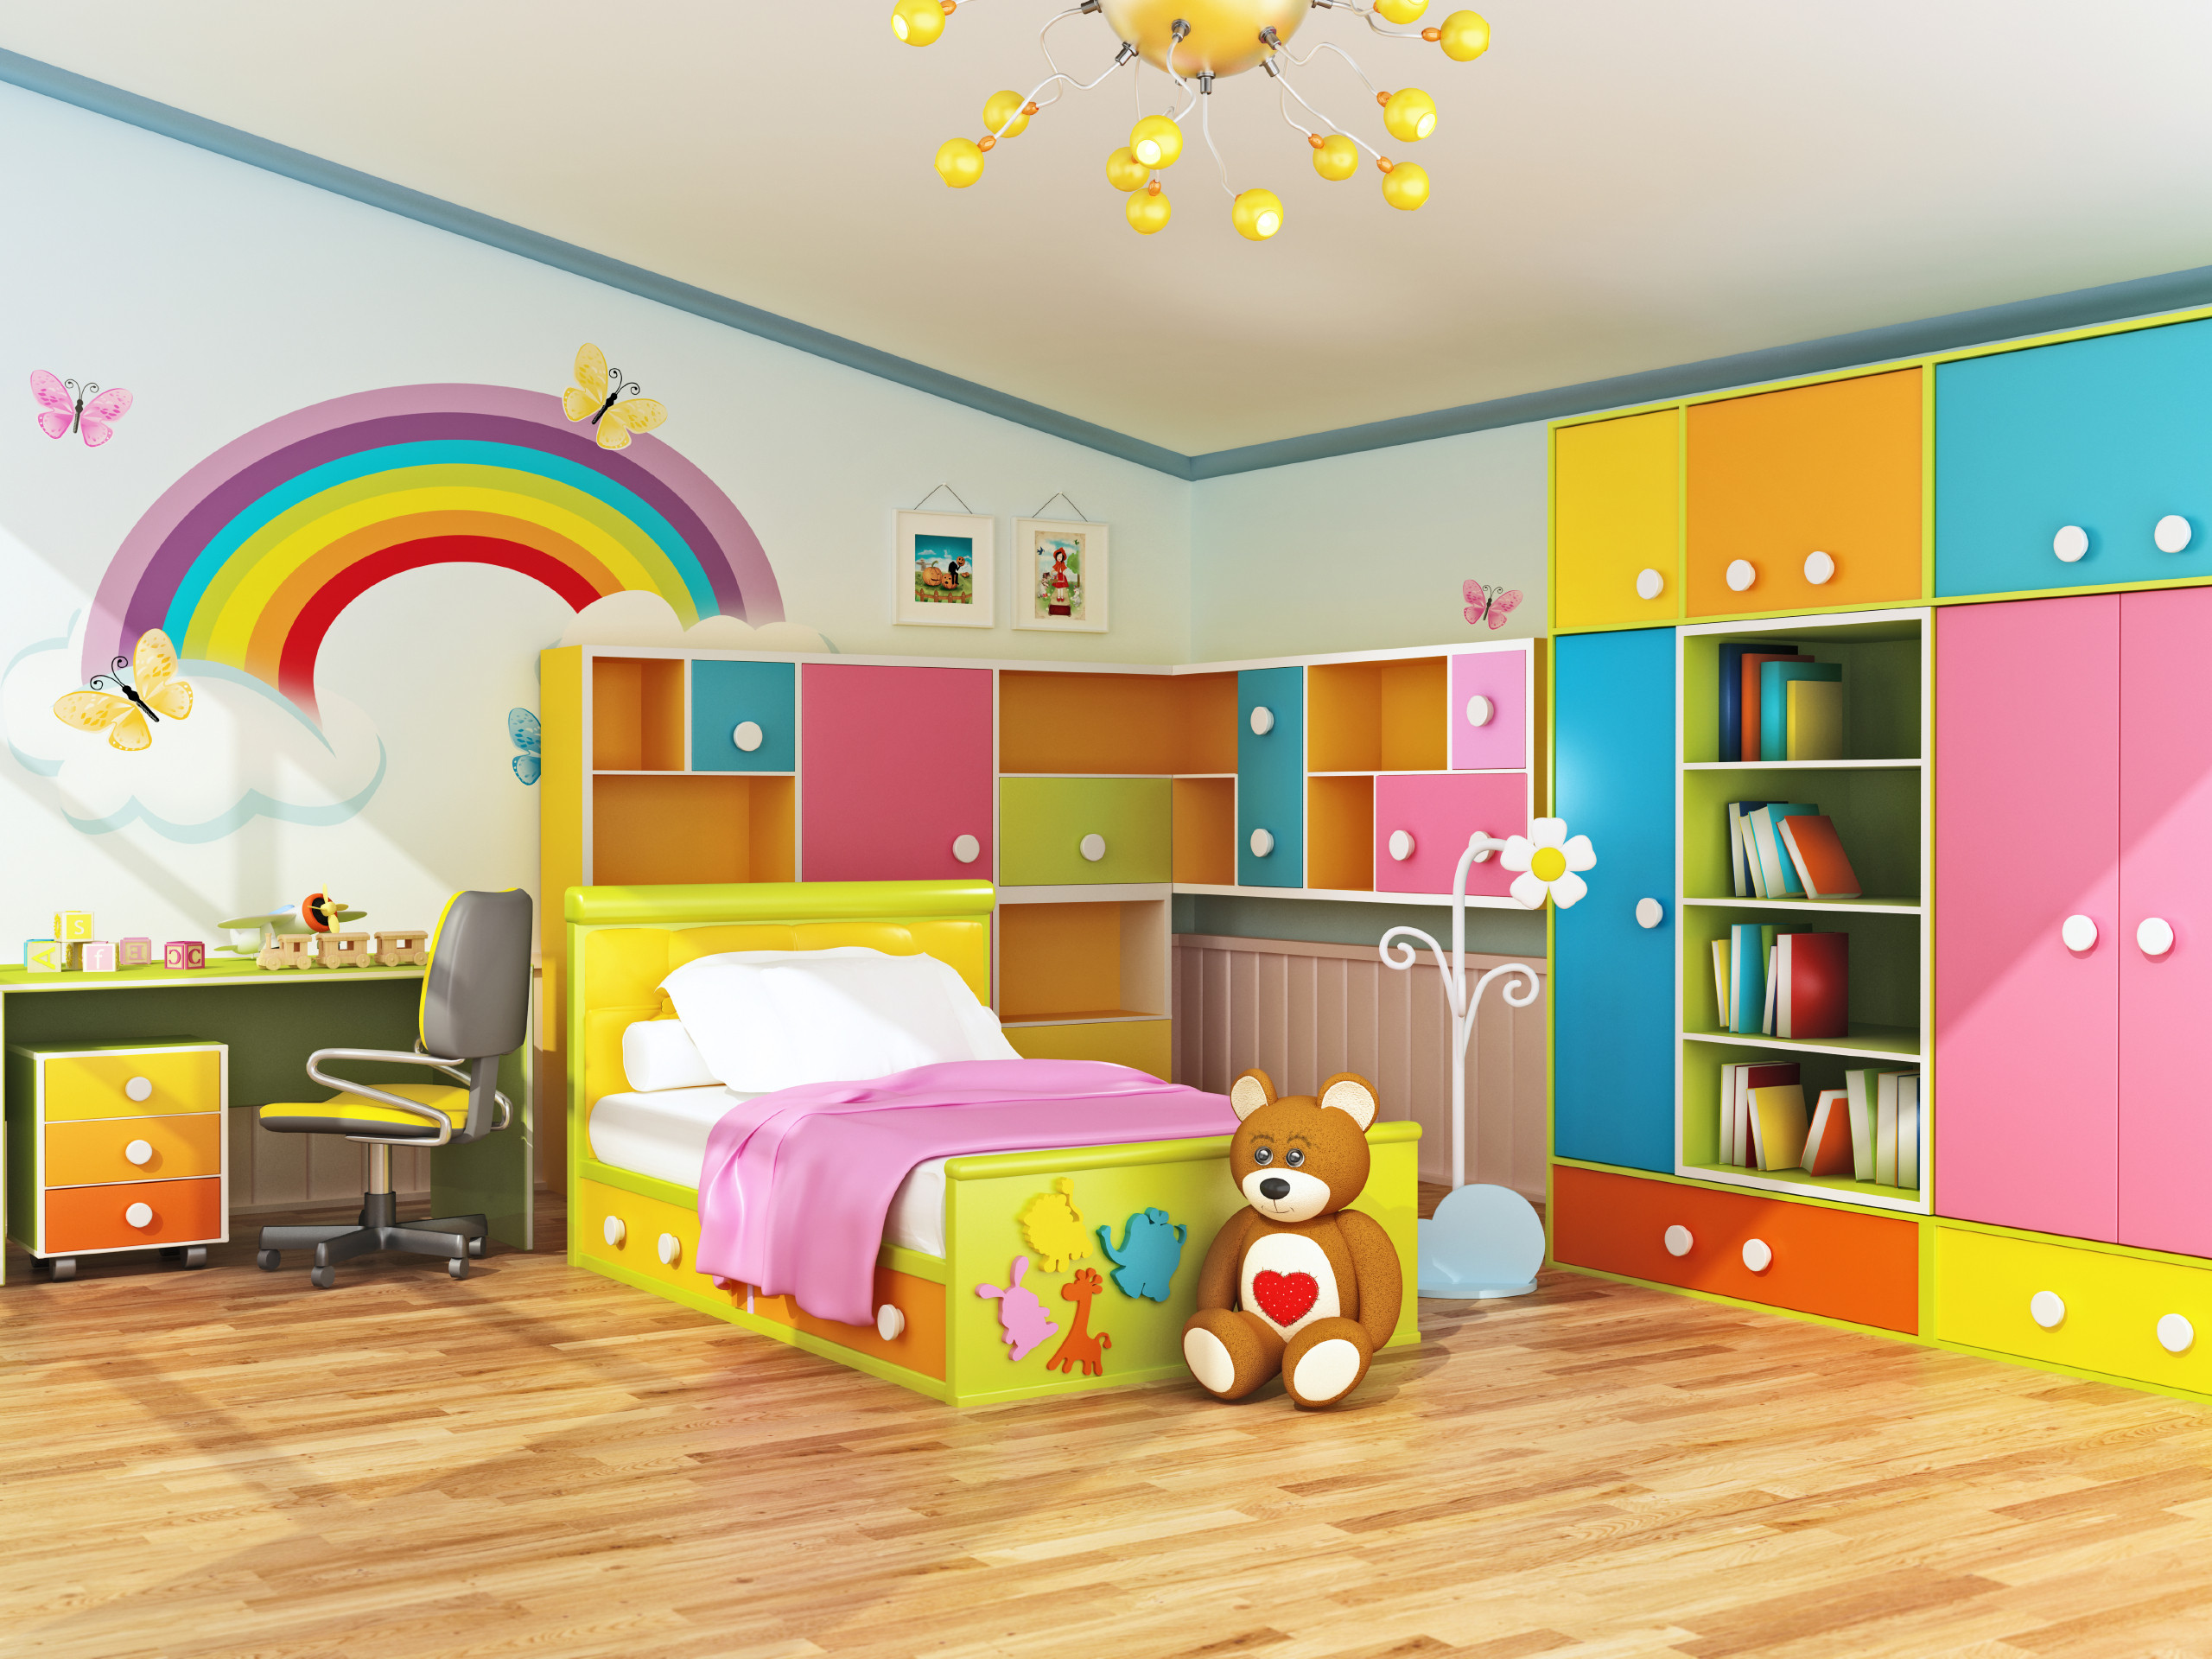 Art For Kids Room
 Plan Ahead When Decorating Kids Bedrooms